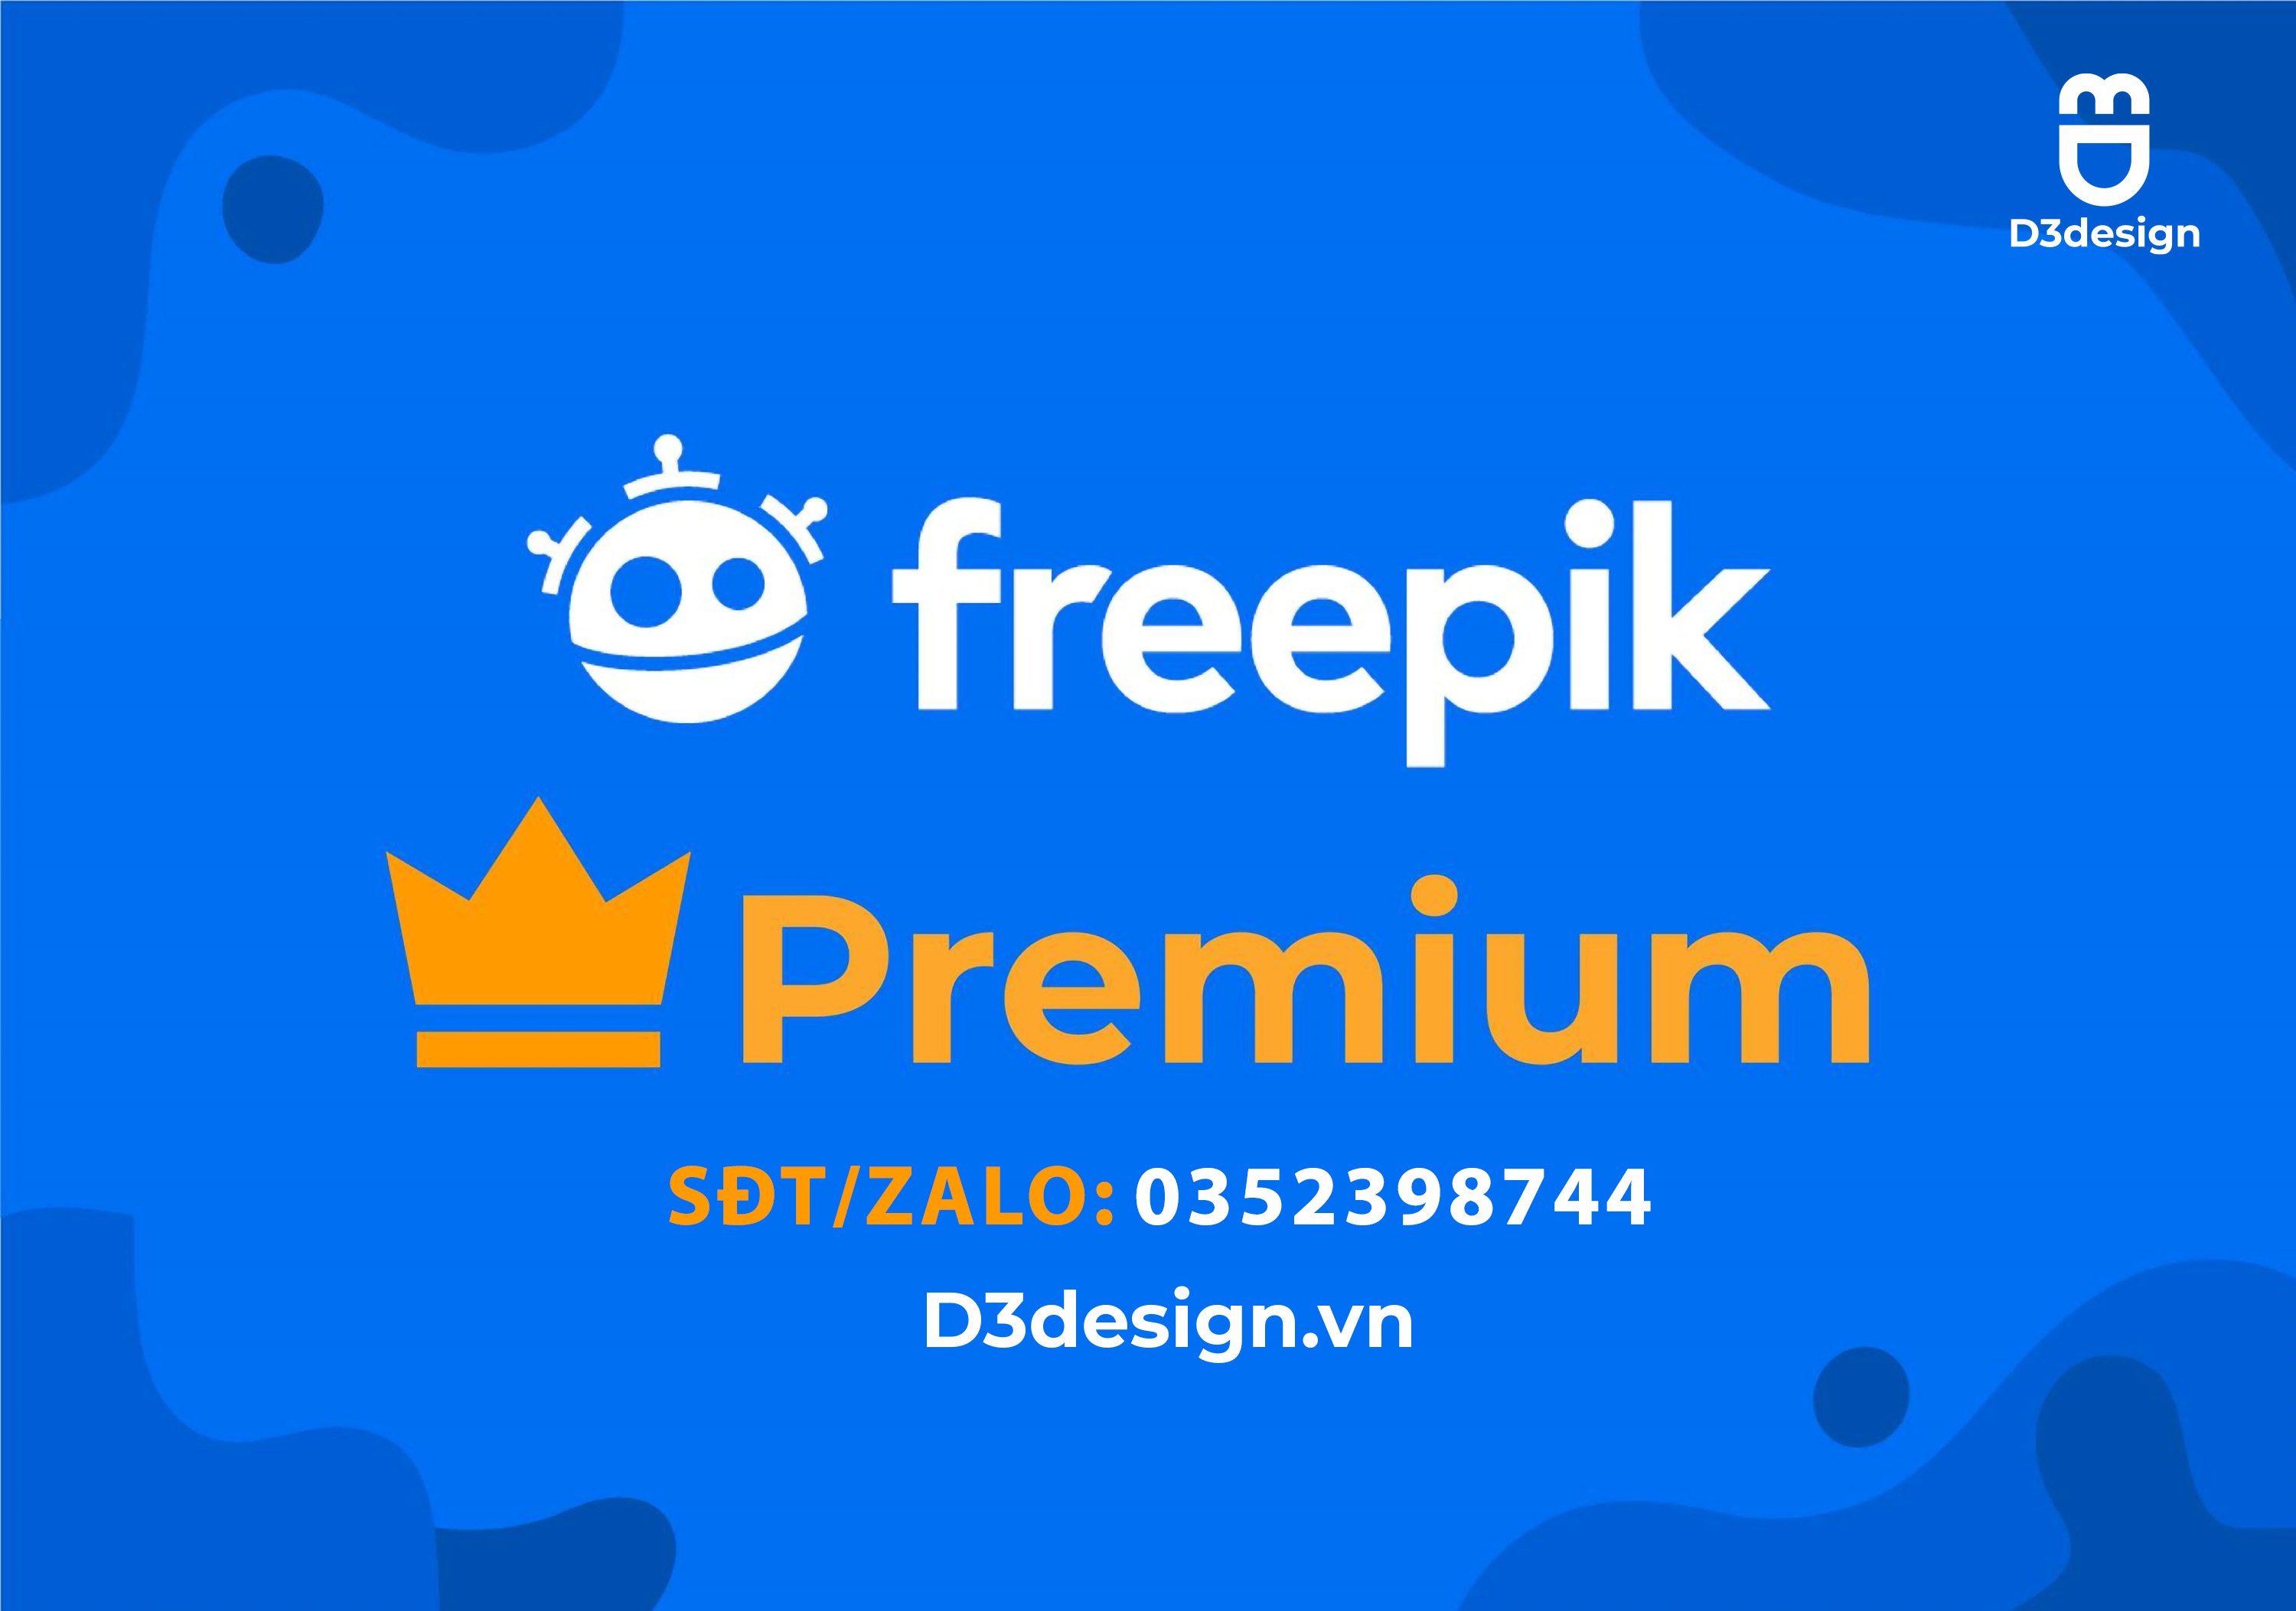 Mua Tài Khoản Freepik Premium Giá Rẻ | D3design